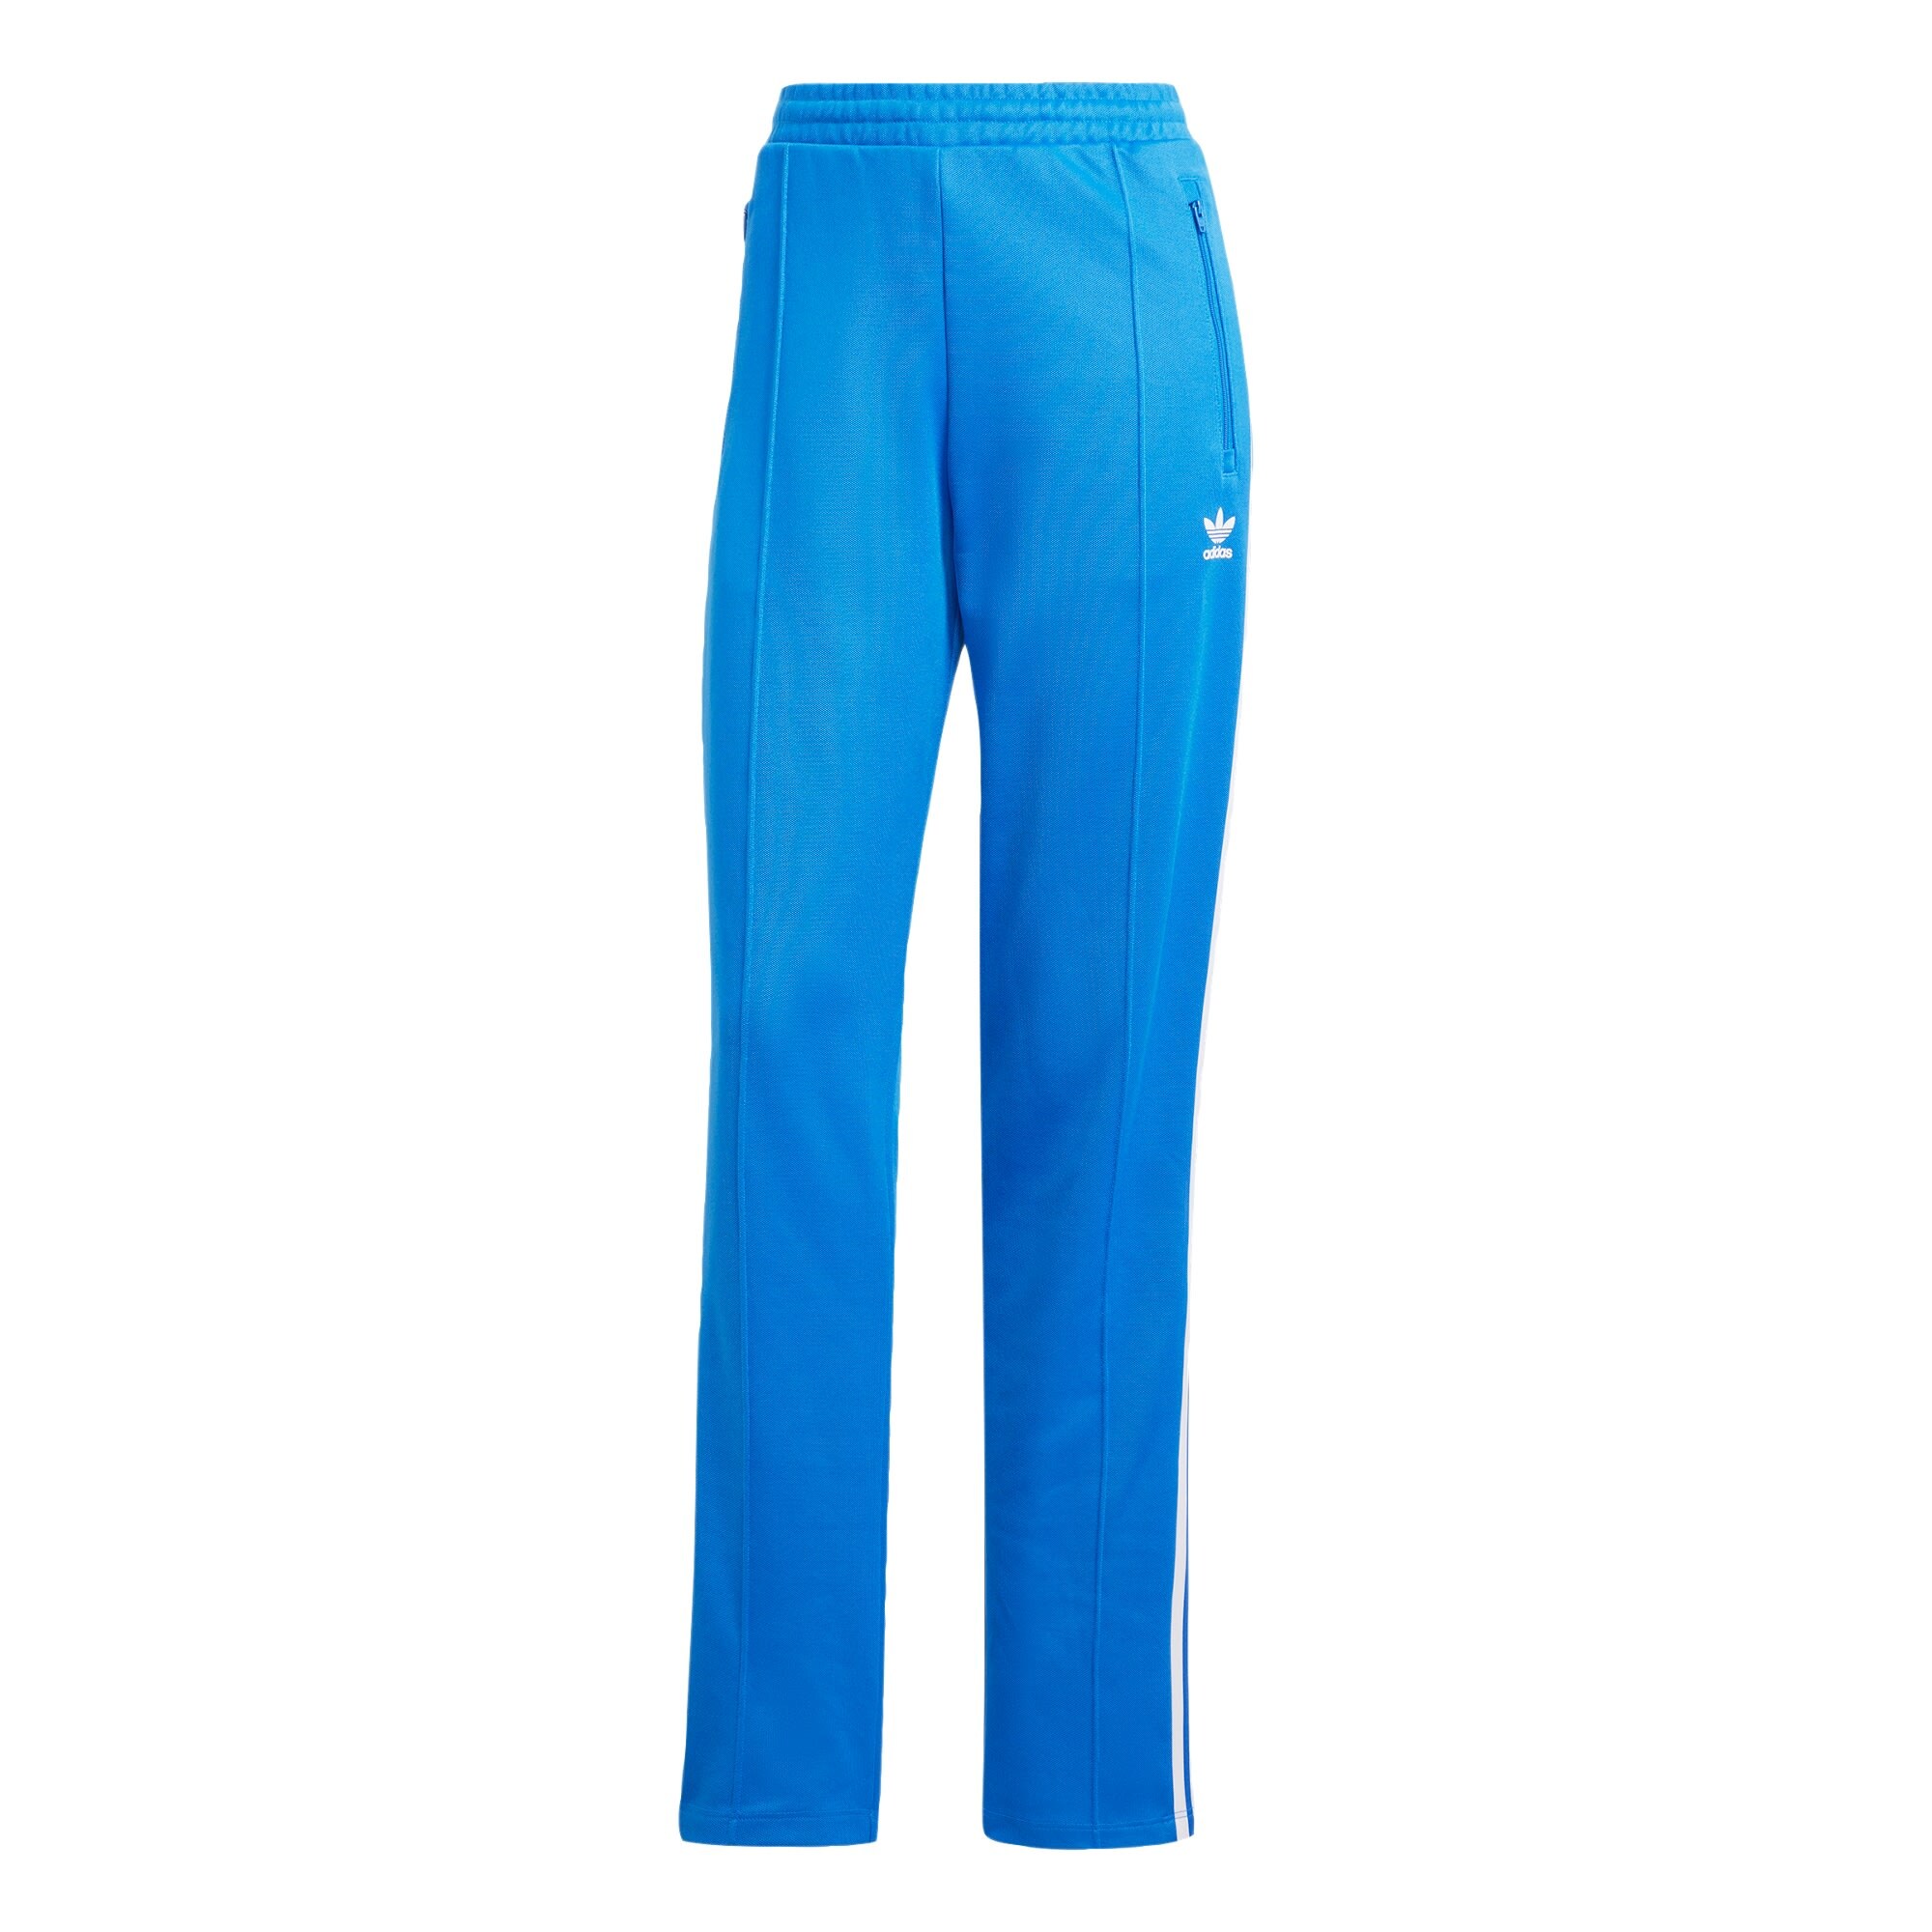 ADIDAS ORIGINALS Pantalon 'Beckenbaue'  bleu roi / blanc en promo-Adidas Originals 1